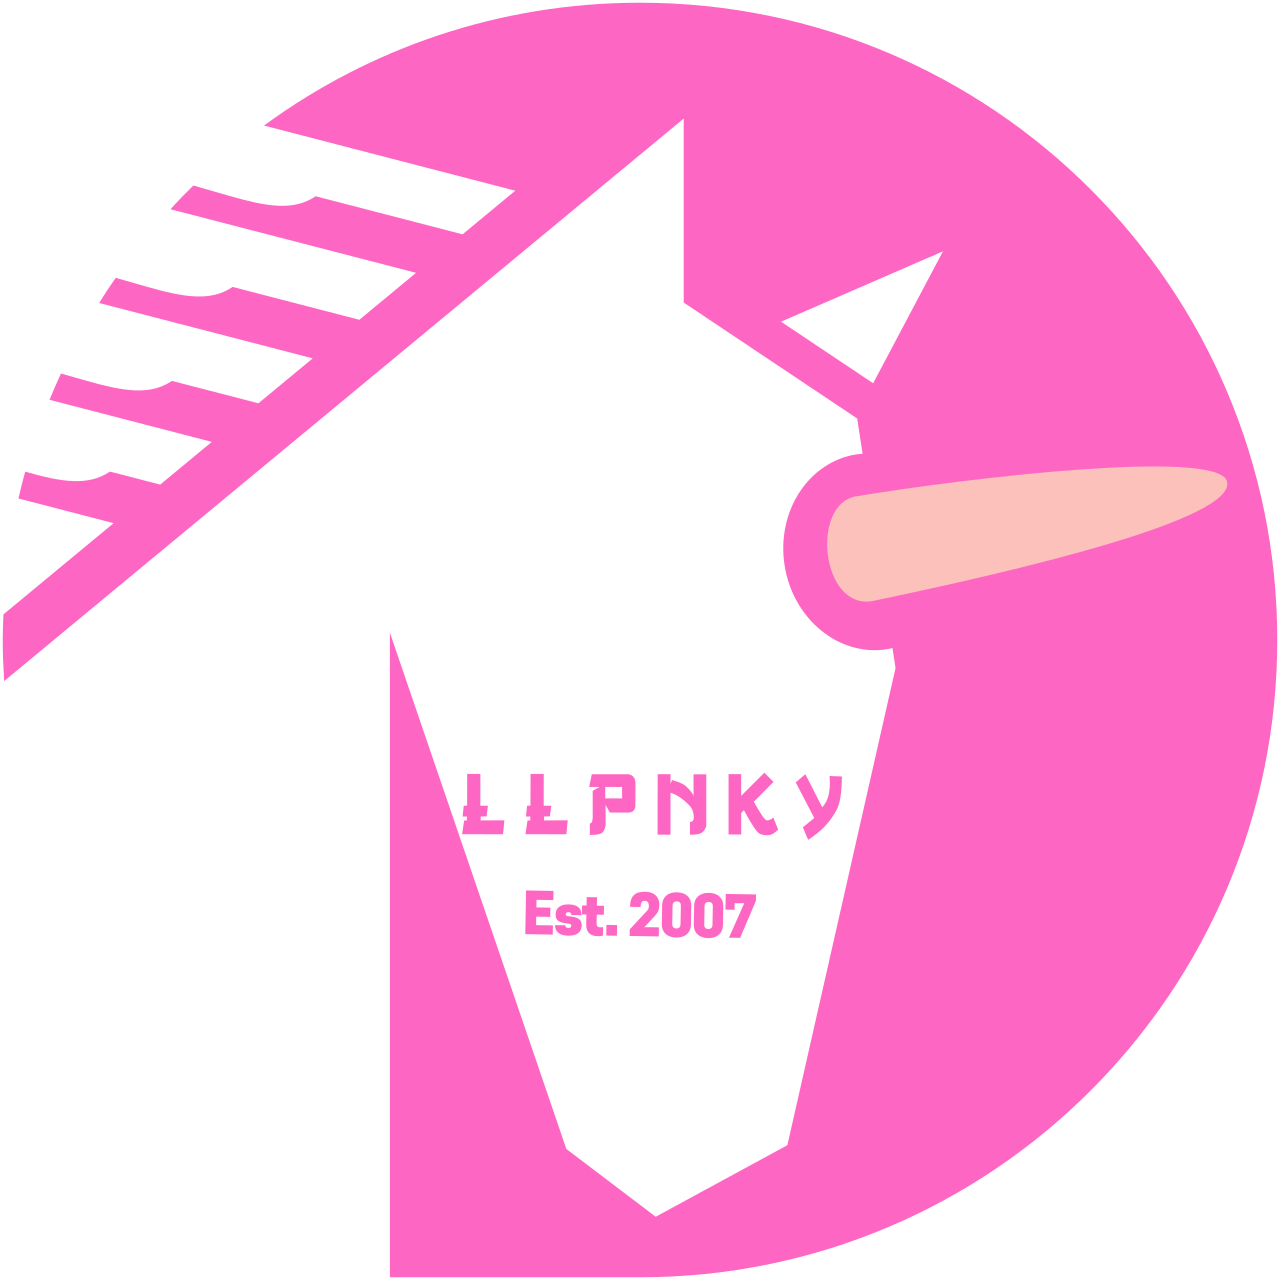 LLPNKY's logo